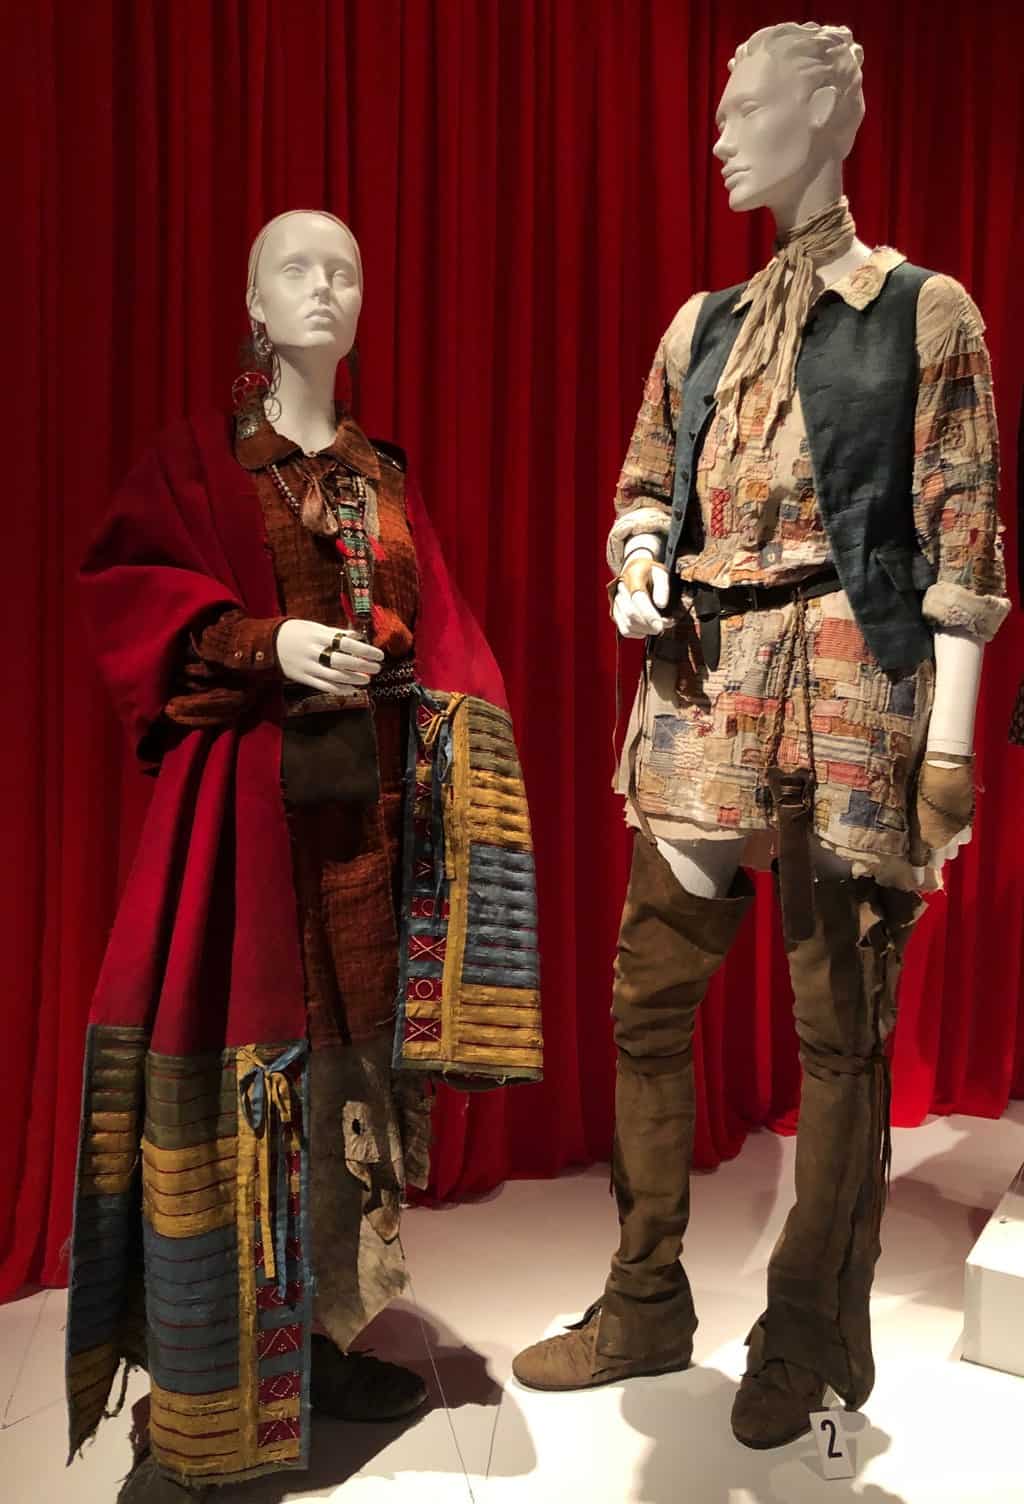 Outlander costumes, FIDM exhibit 2019